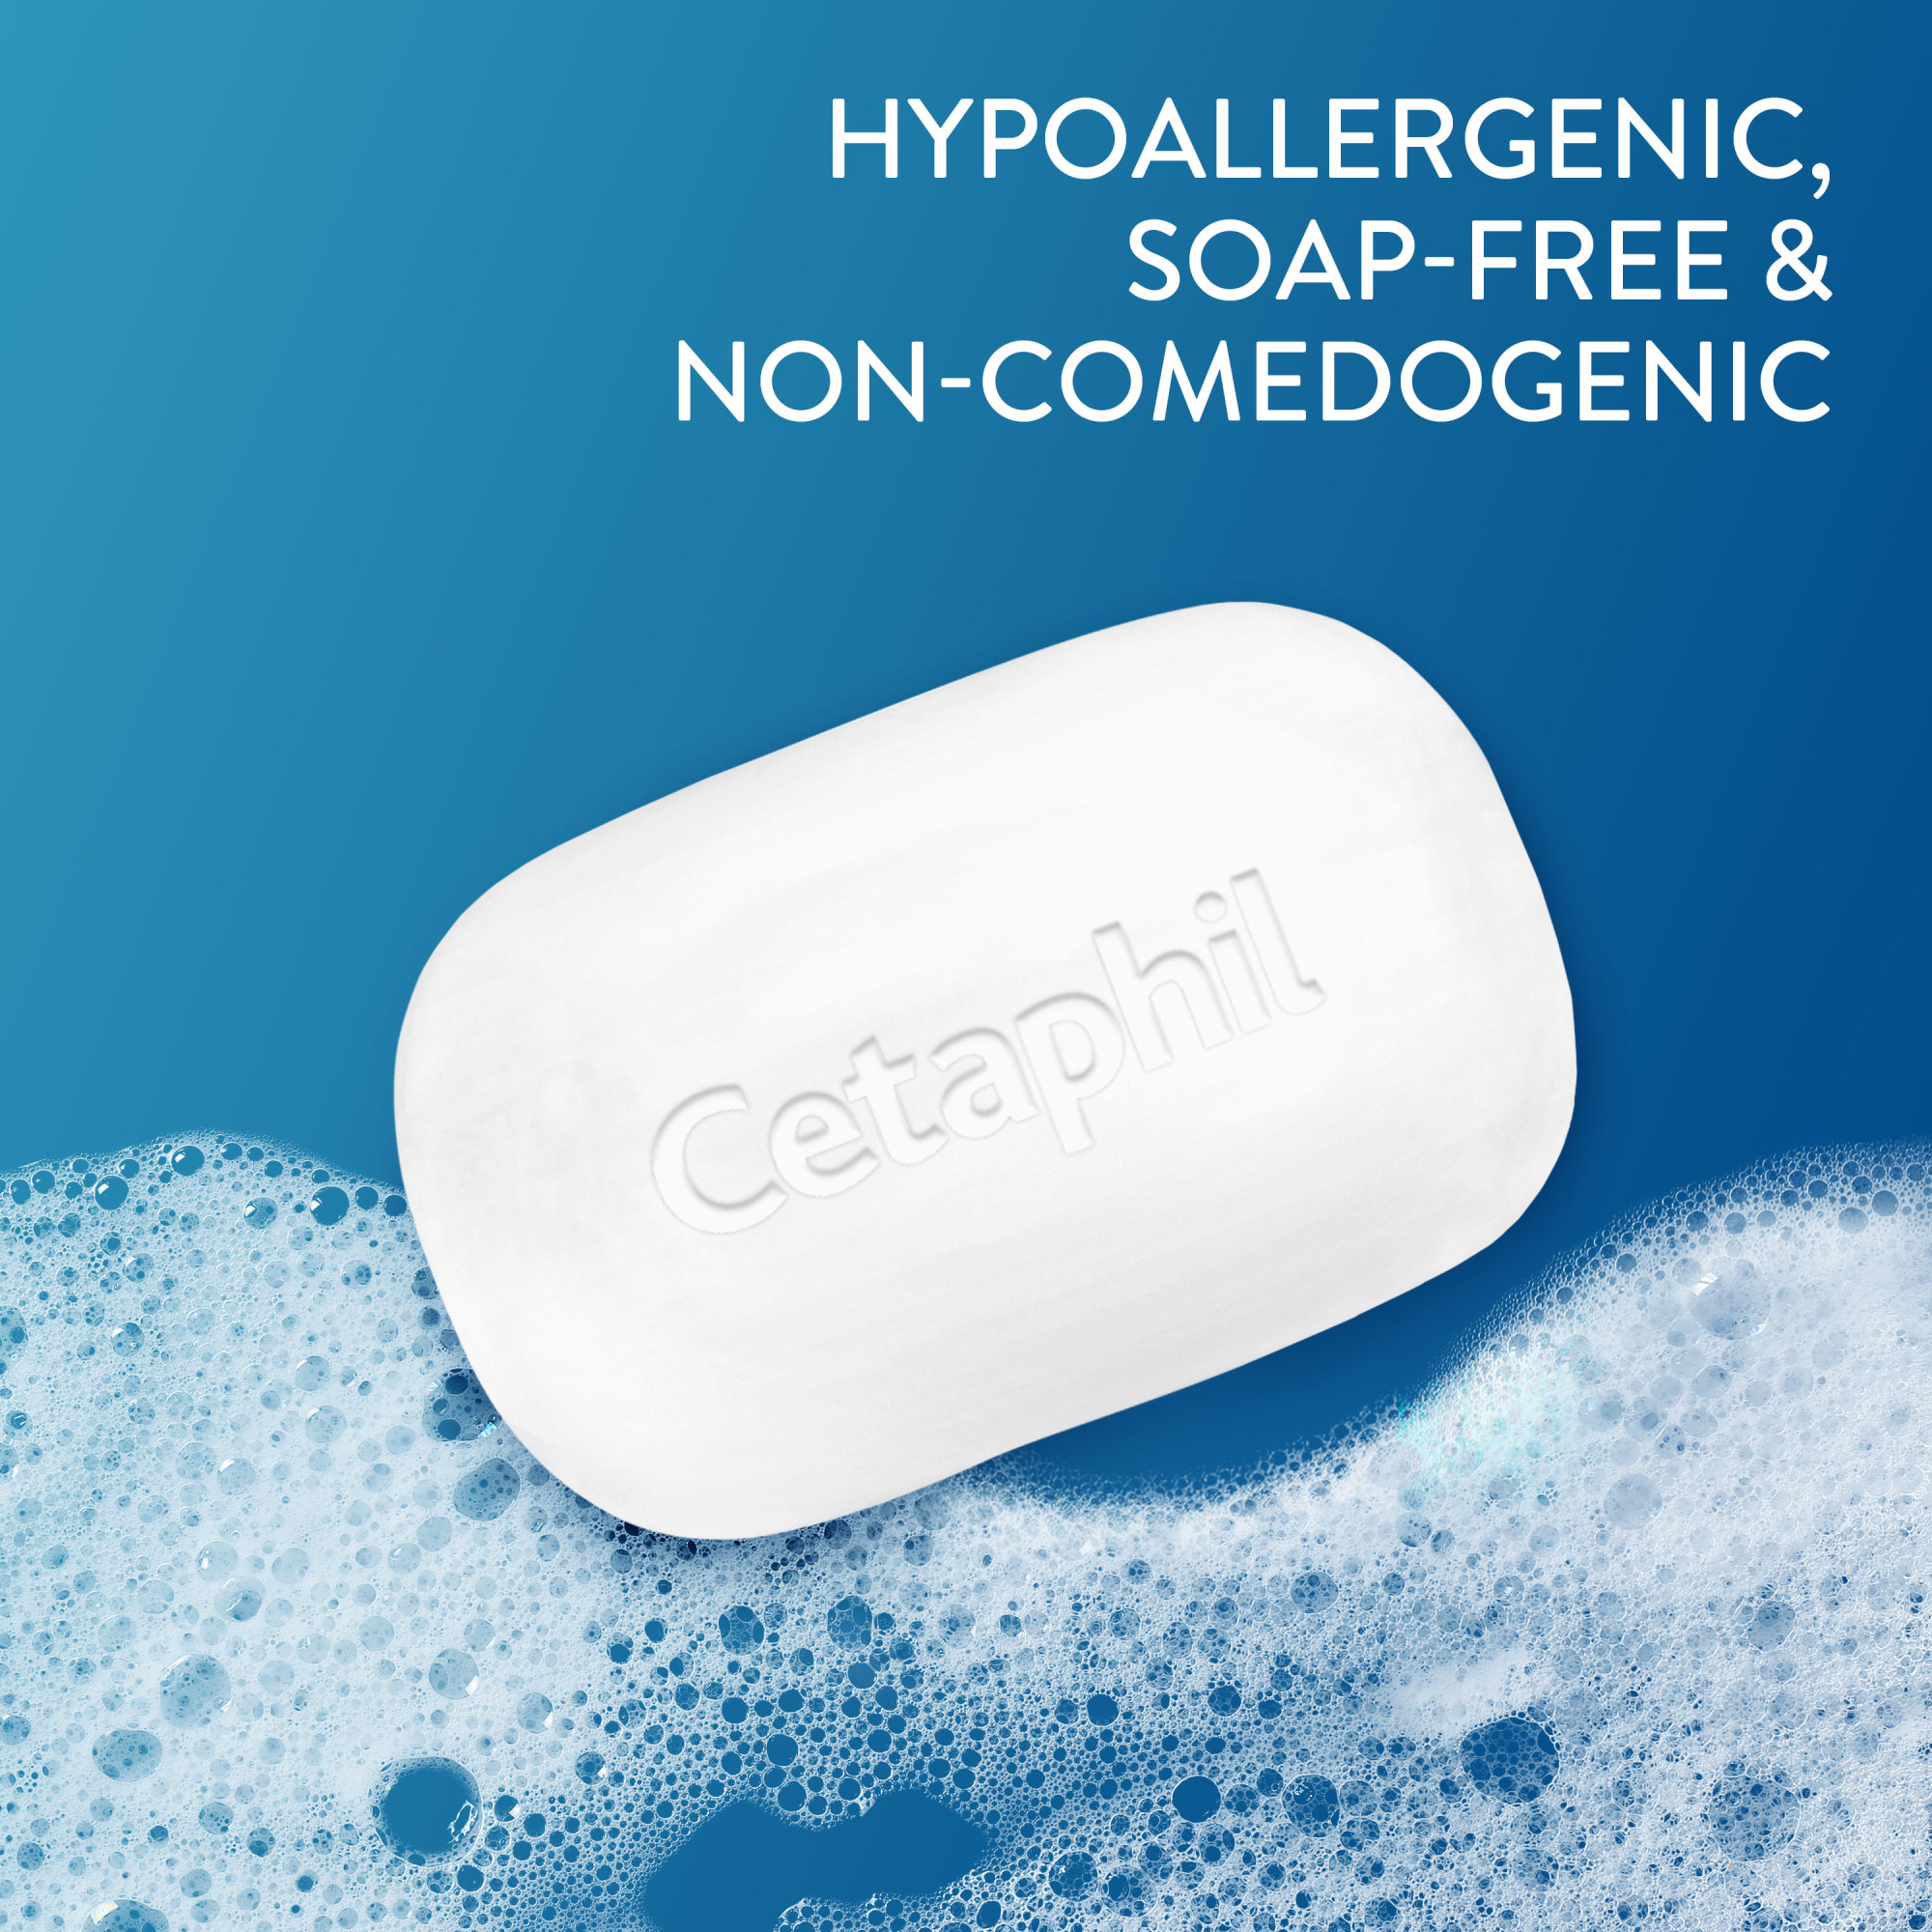 Cetaphil Gentle Cleansing Bar, 4.5 oz, Nourishing Cleansing Bar For Dry, Sensitive Skin - image 3 of 8